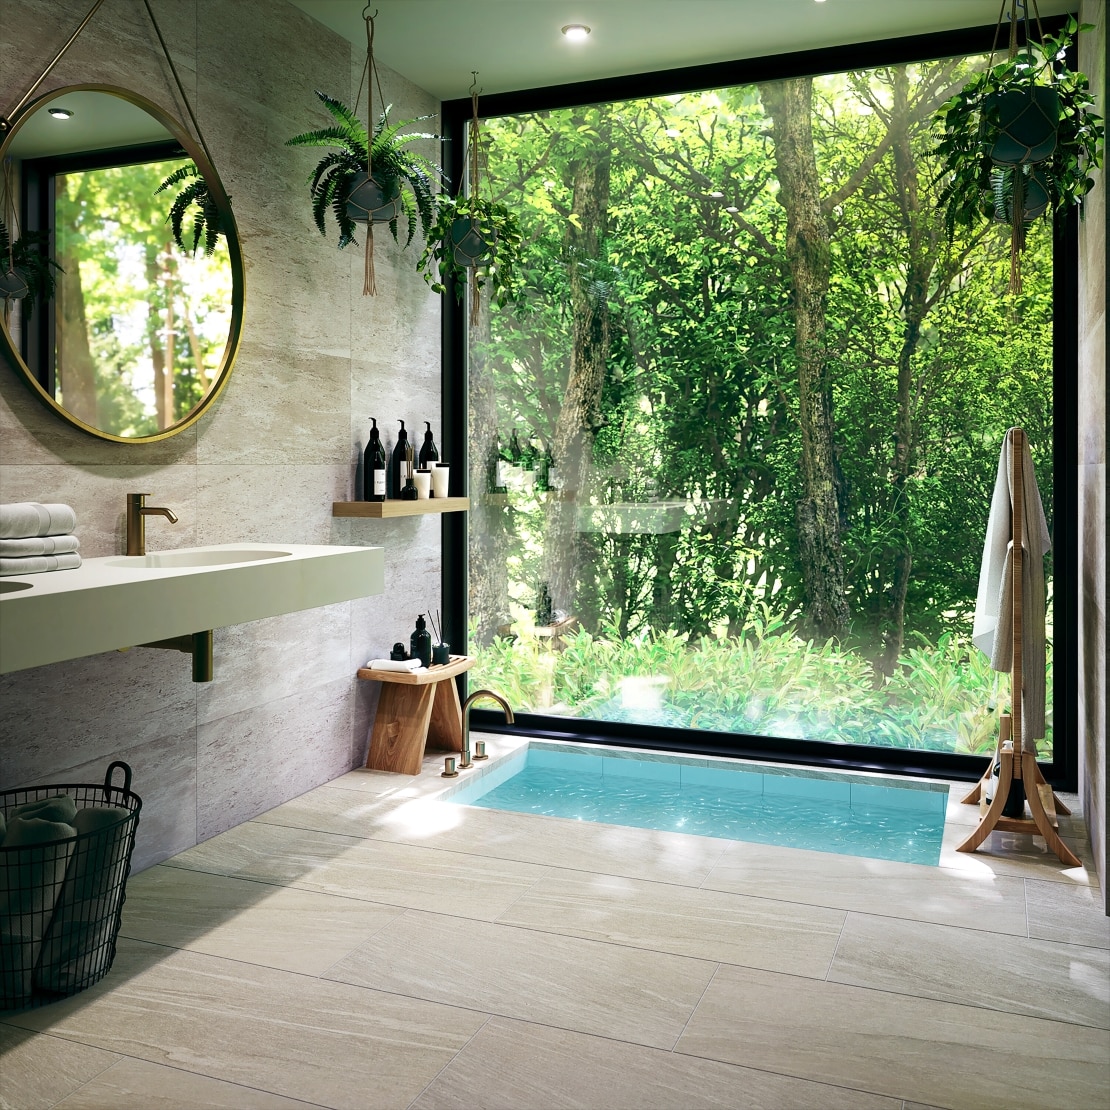 Bathroom with sunken bathtub overlooking a forest.